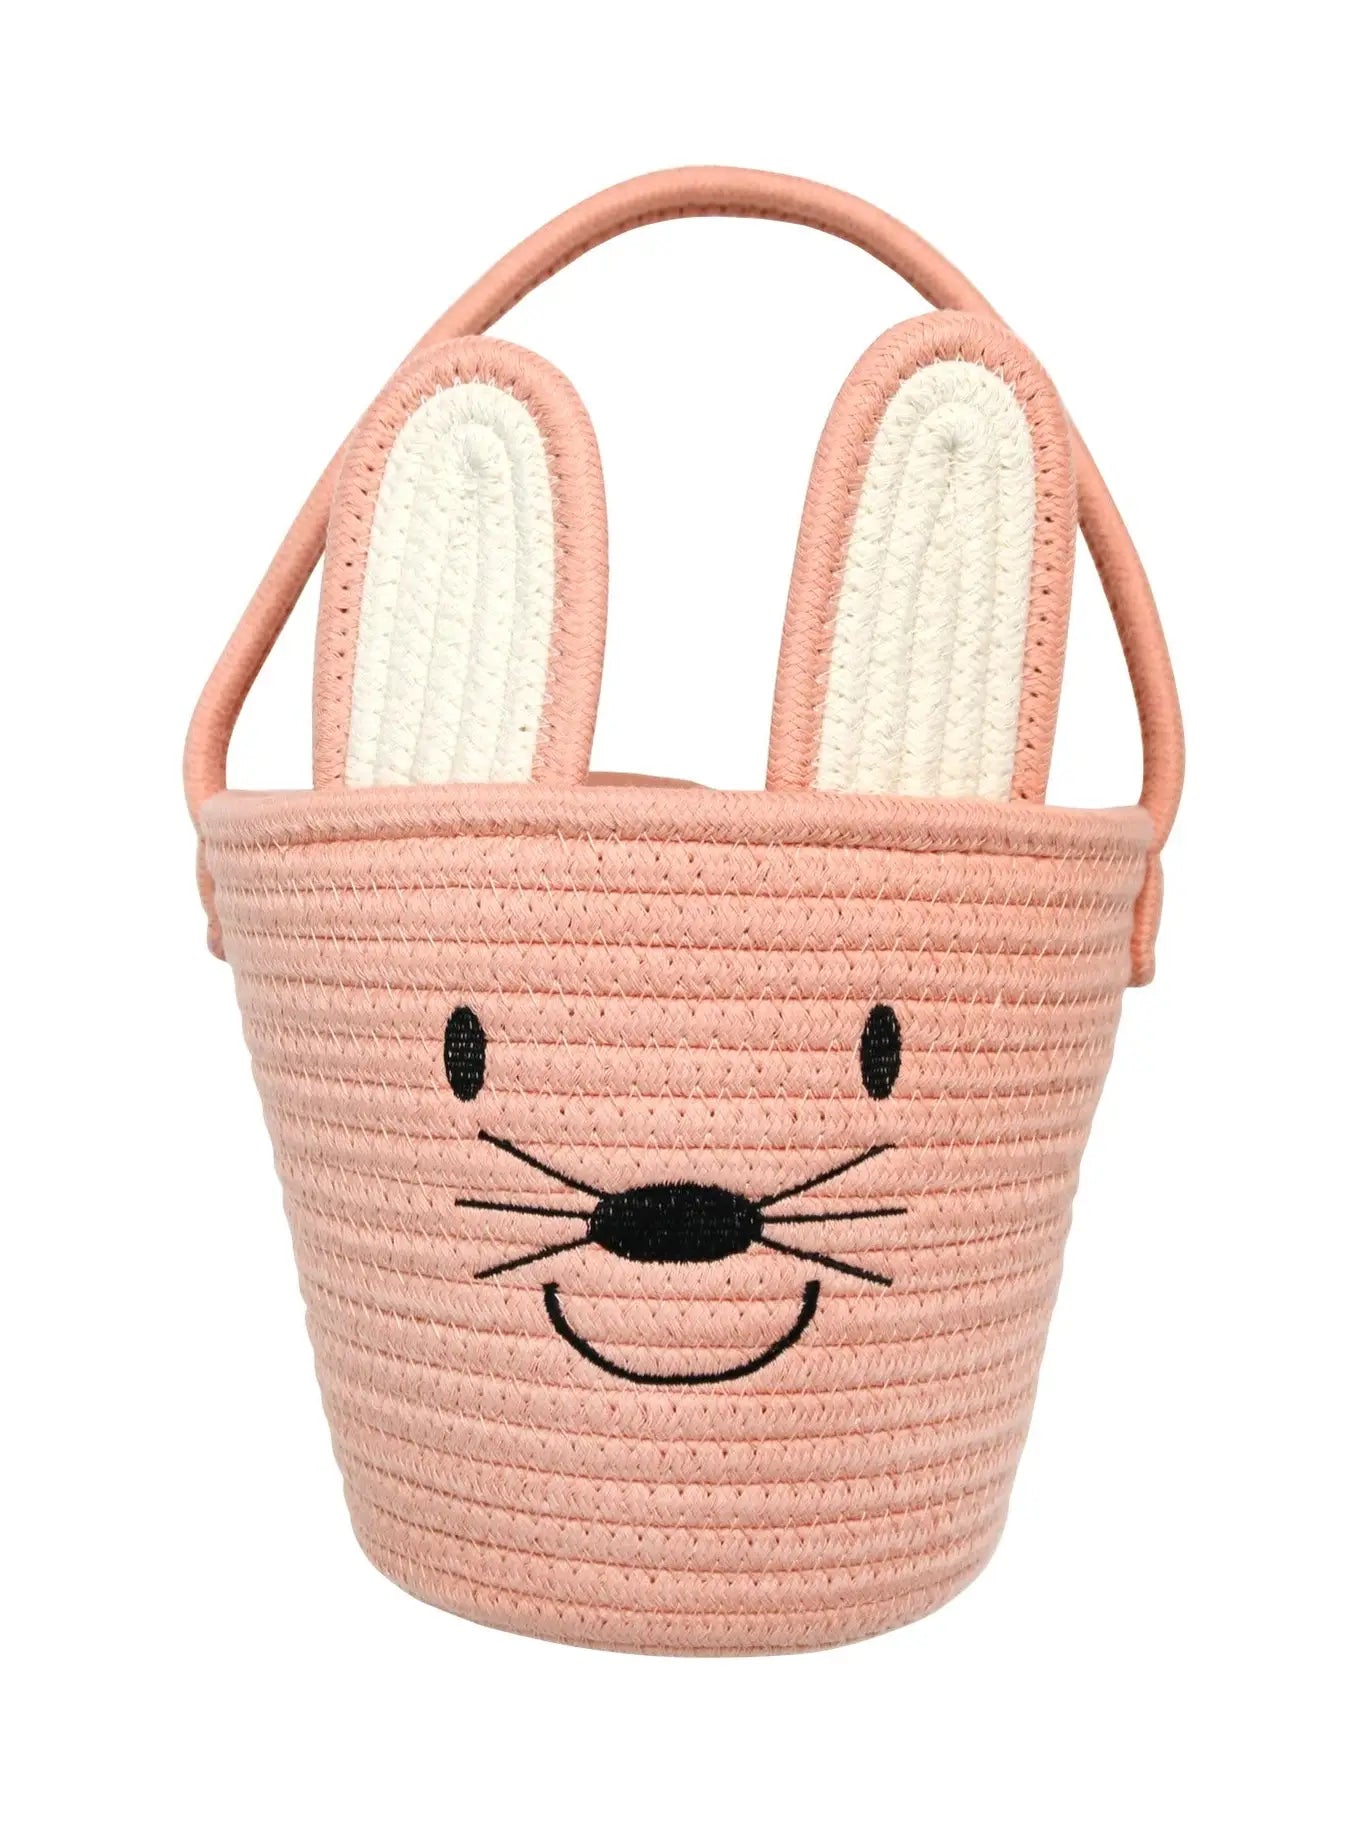 Rope Easter Basket - Pink Bunny